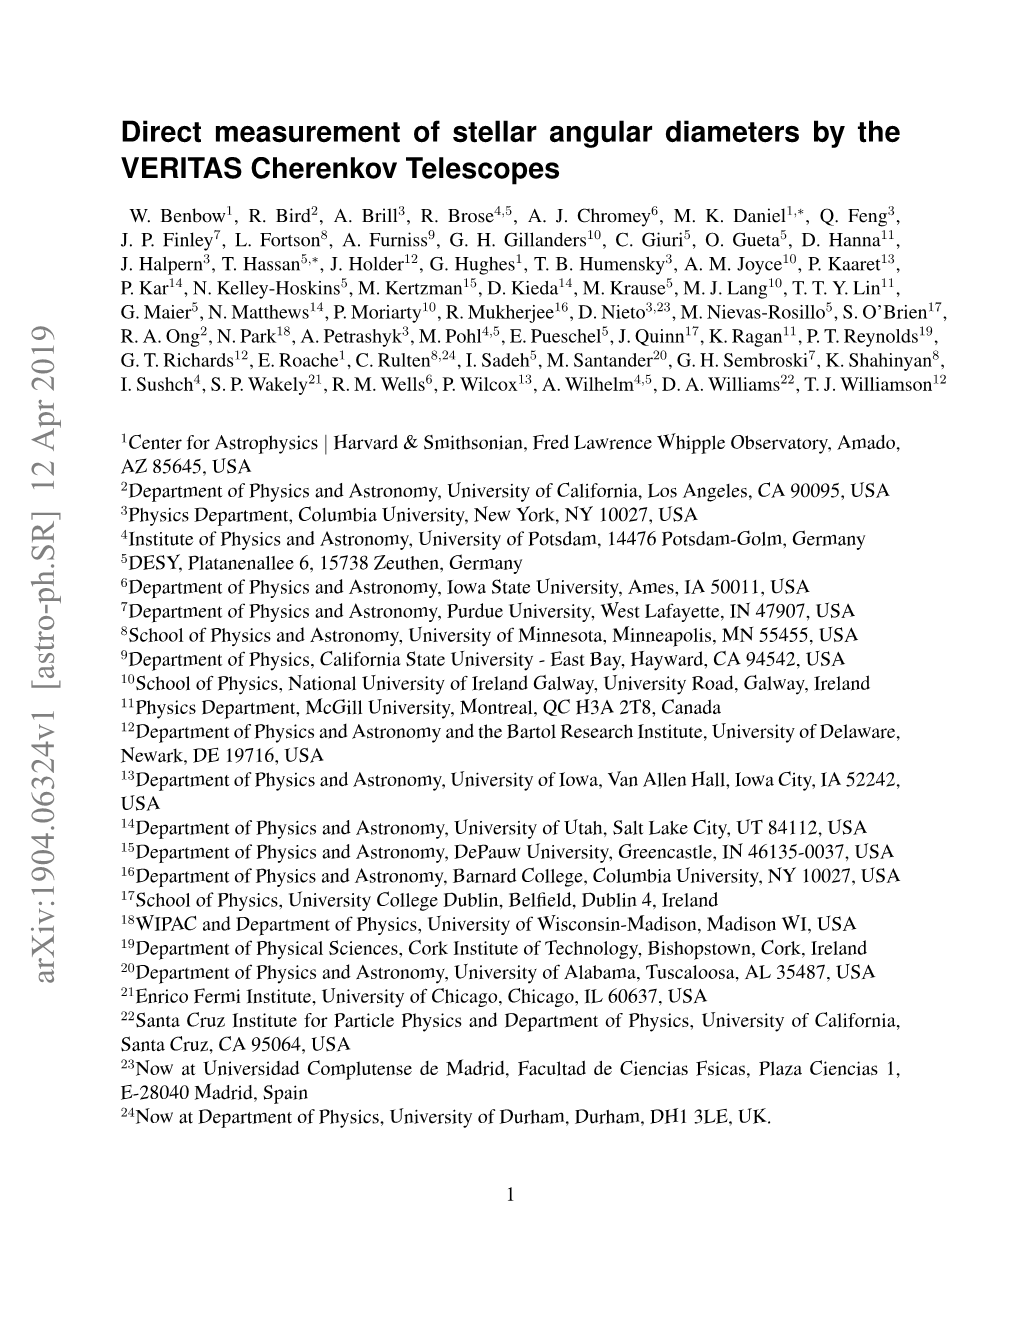 Direct Measurement of Stellar Angular Diameters by the VERITAS Cherenkov Telescopes